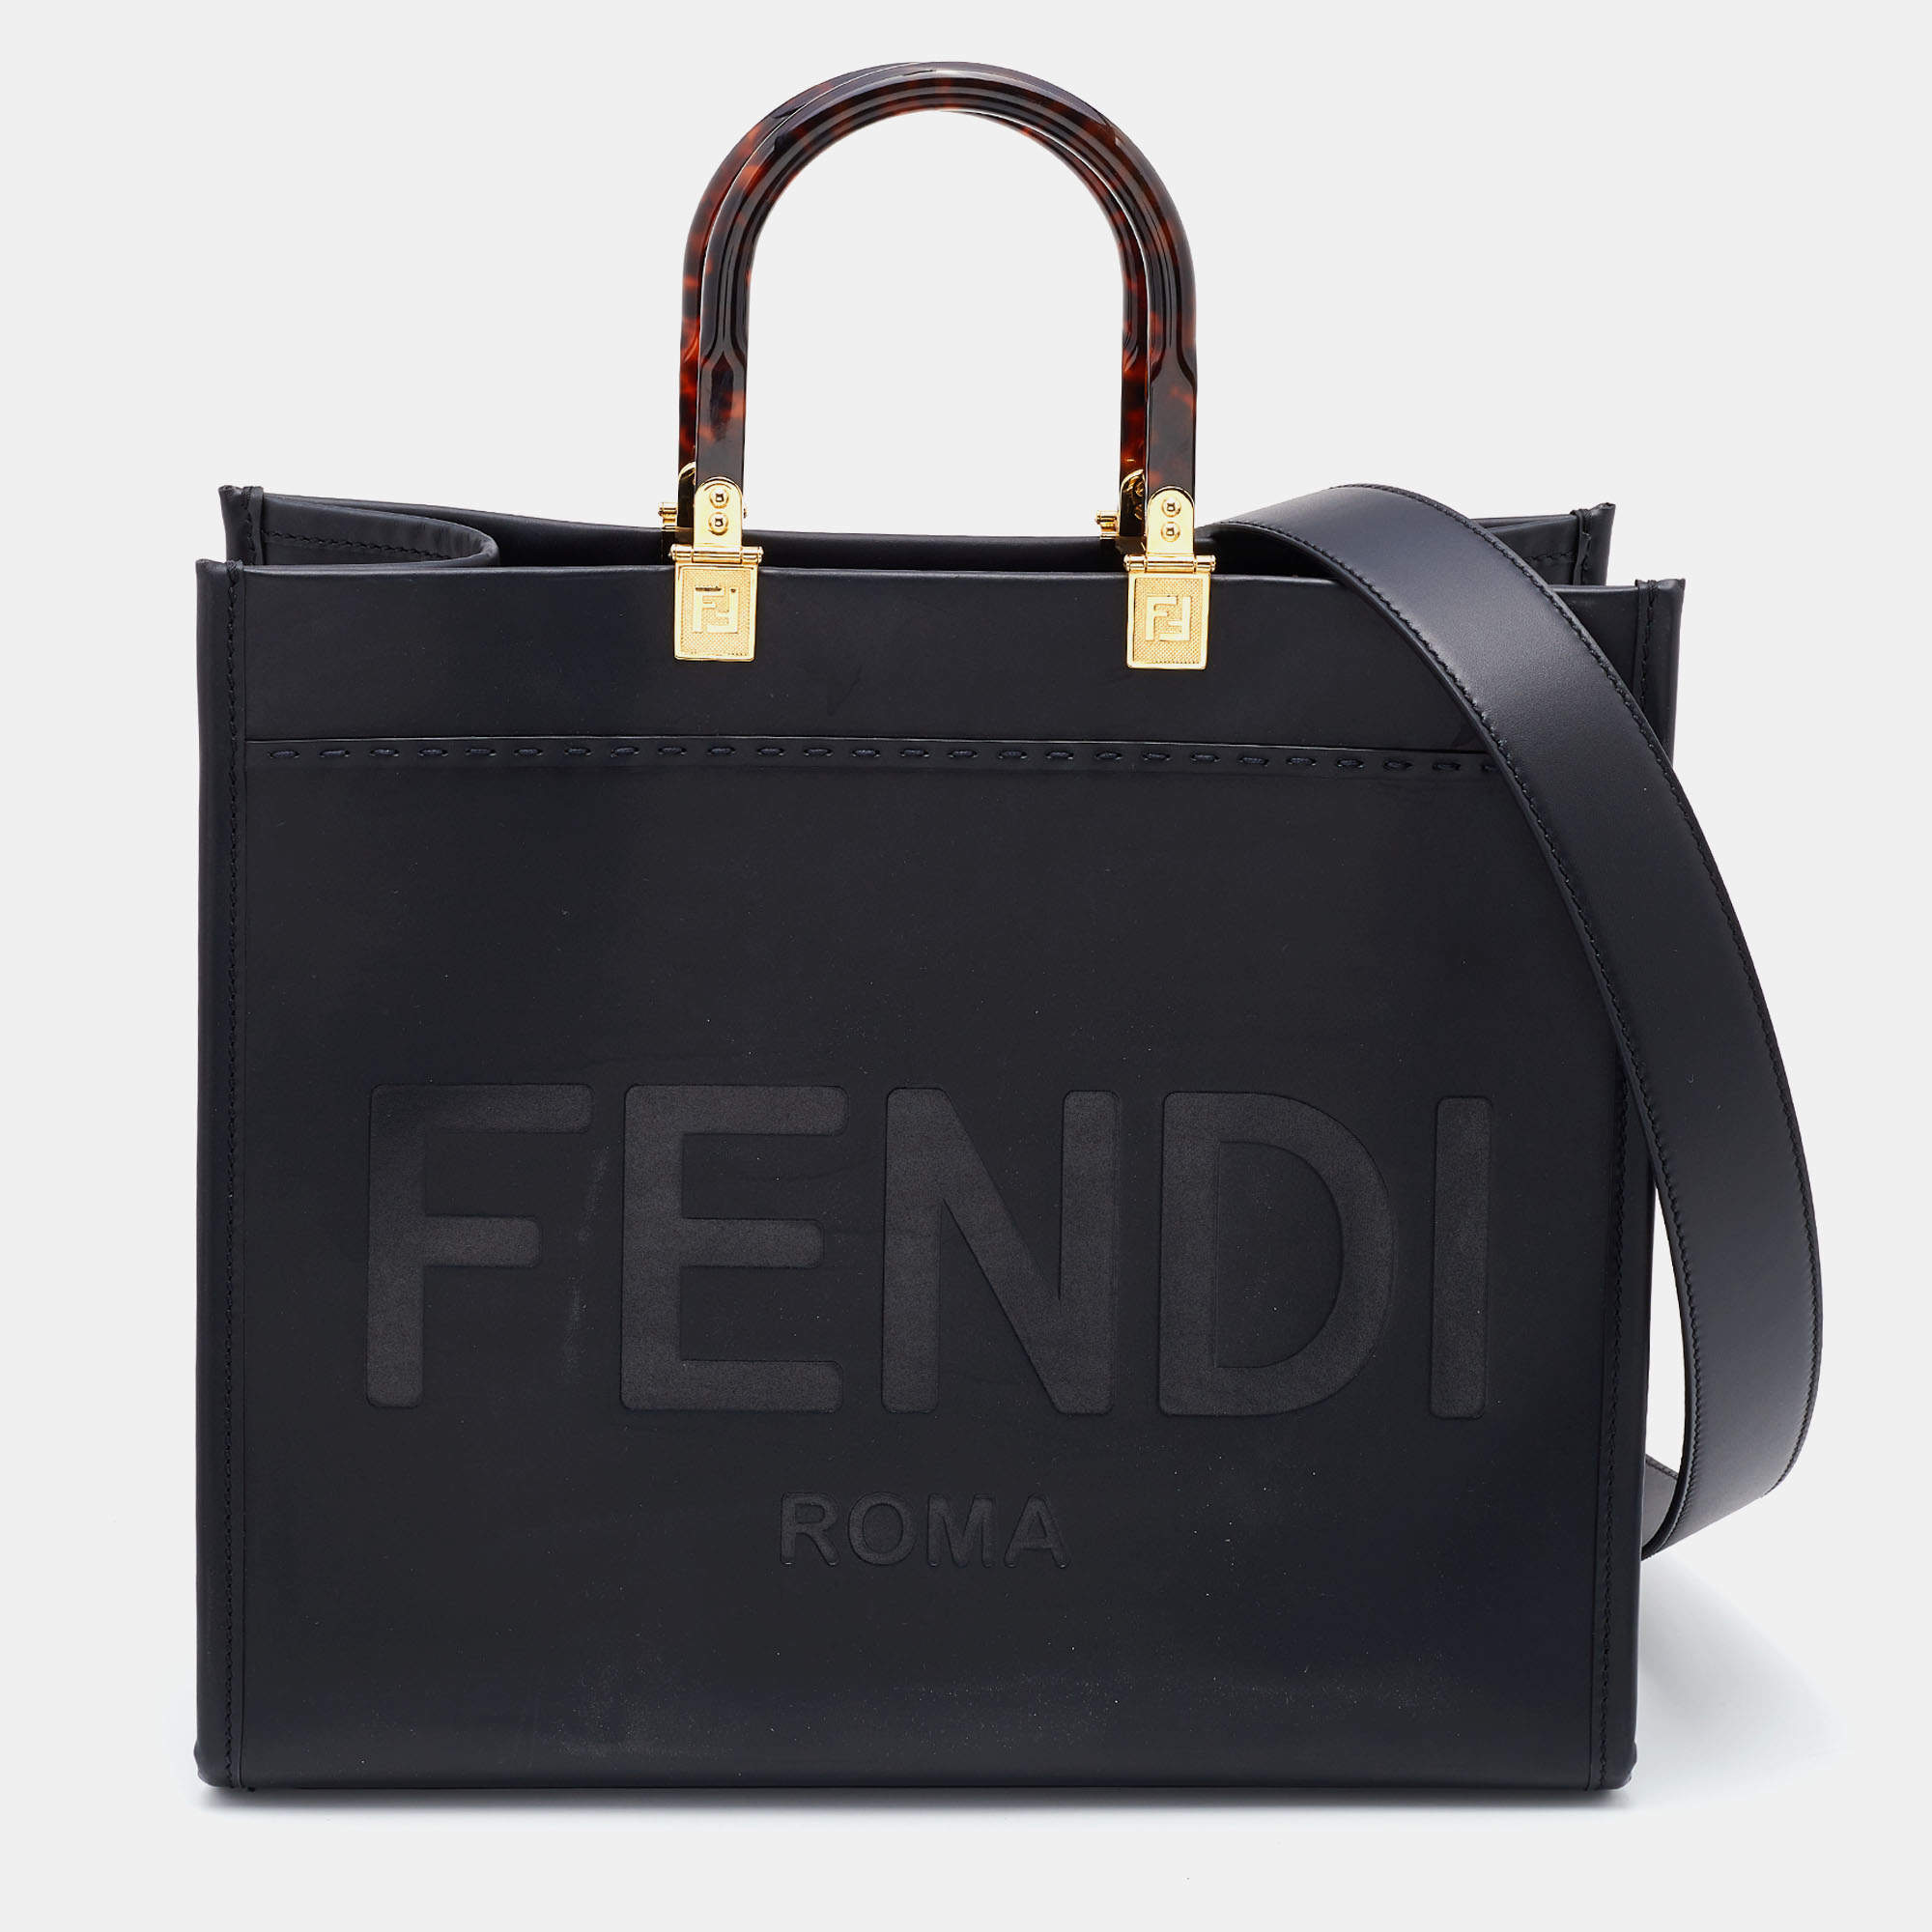 Fendi Black Leather Medium Sunshine Shopper Tote